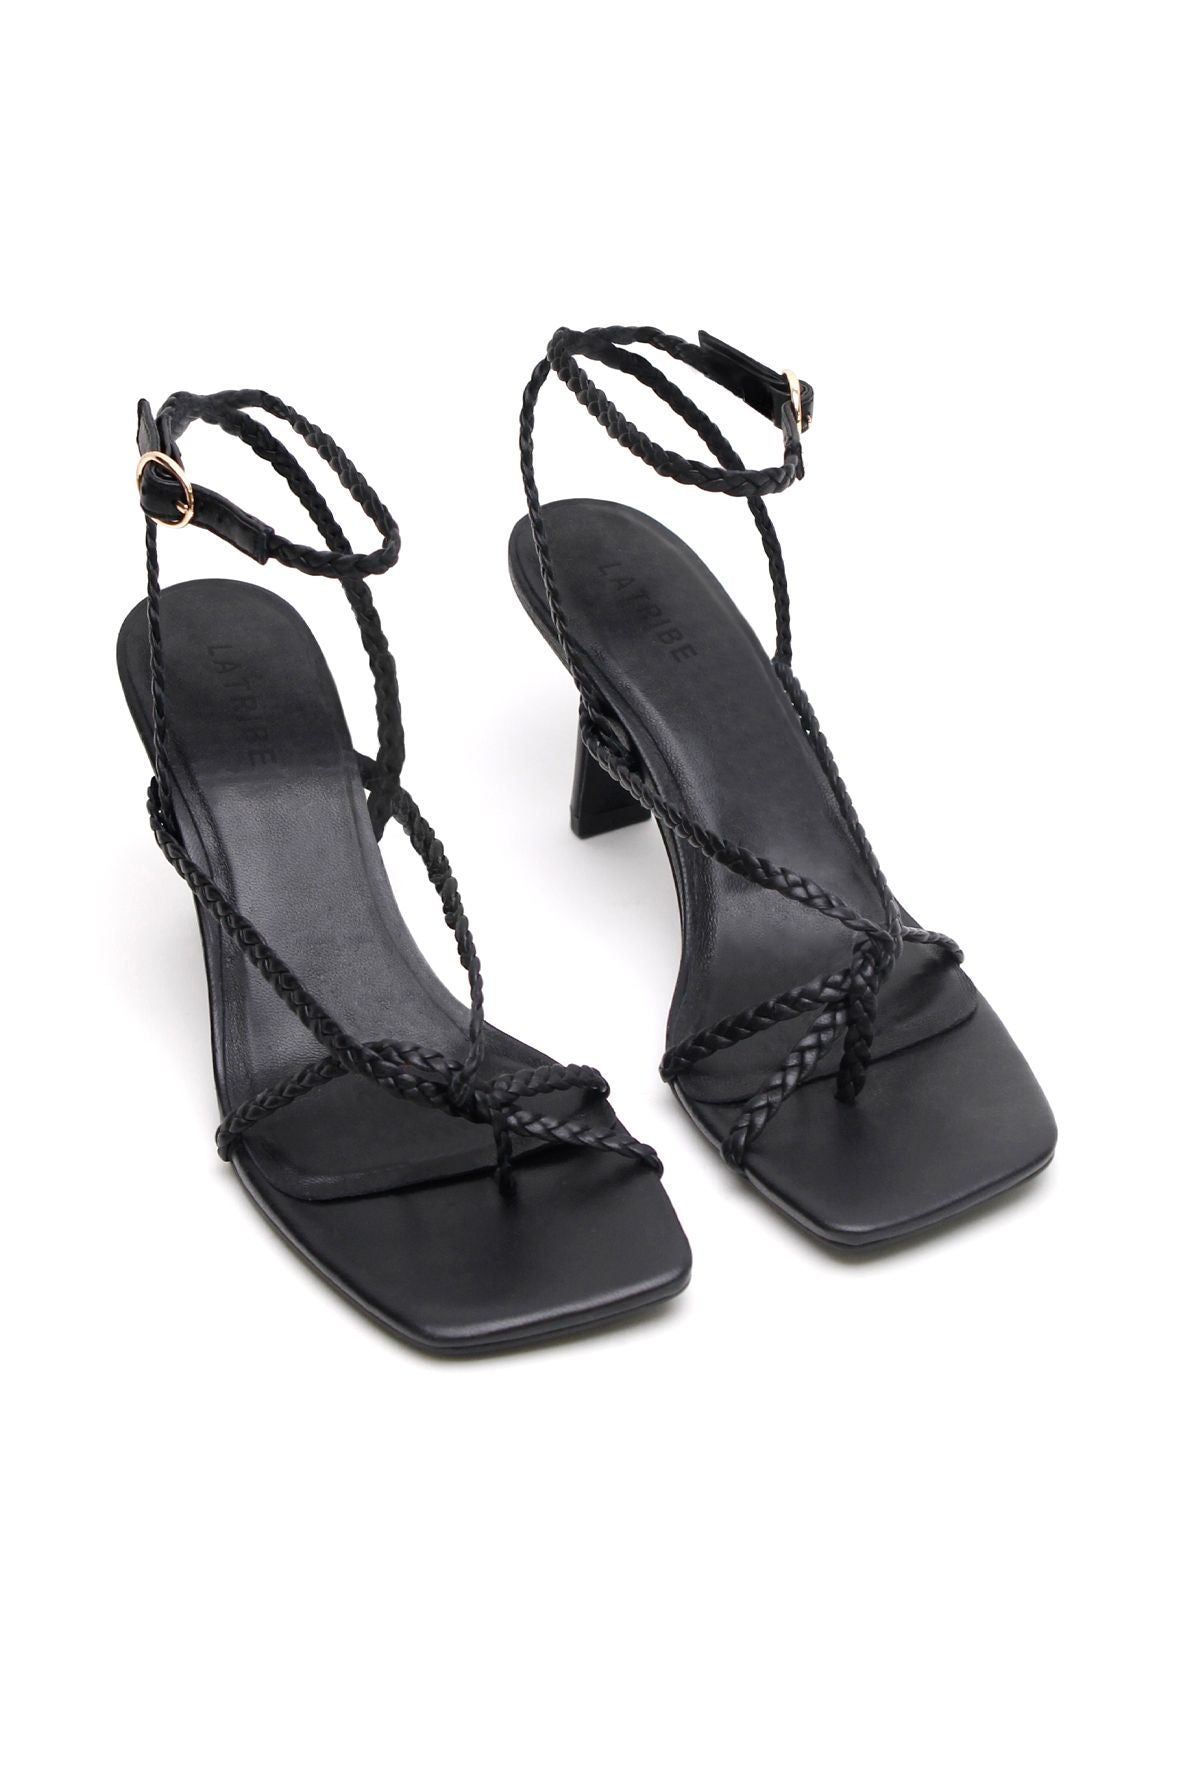 BRAIDED STRAP HEEL-BLACK Shoes LA TRIBE 36 Black 